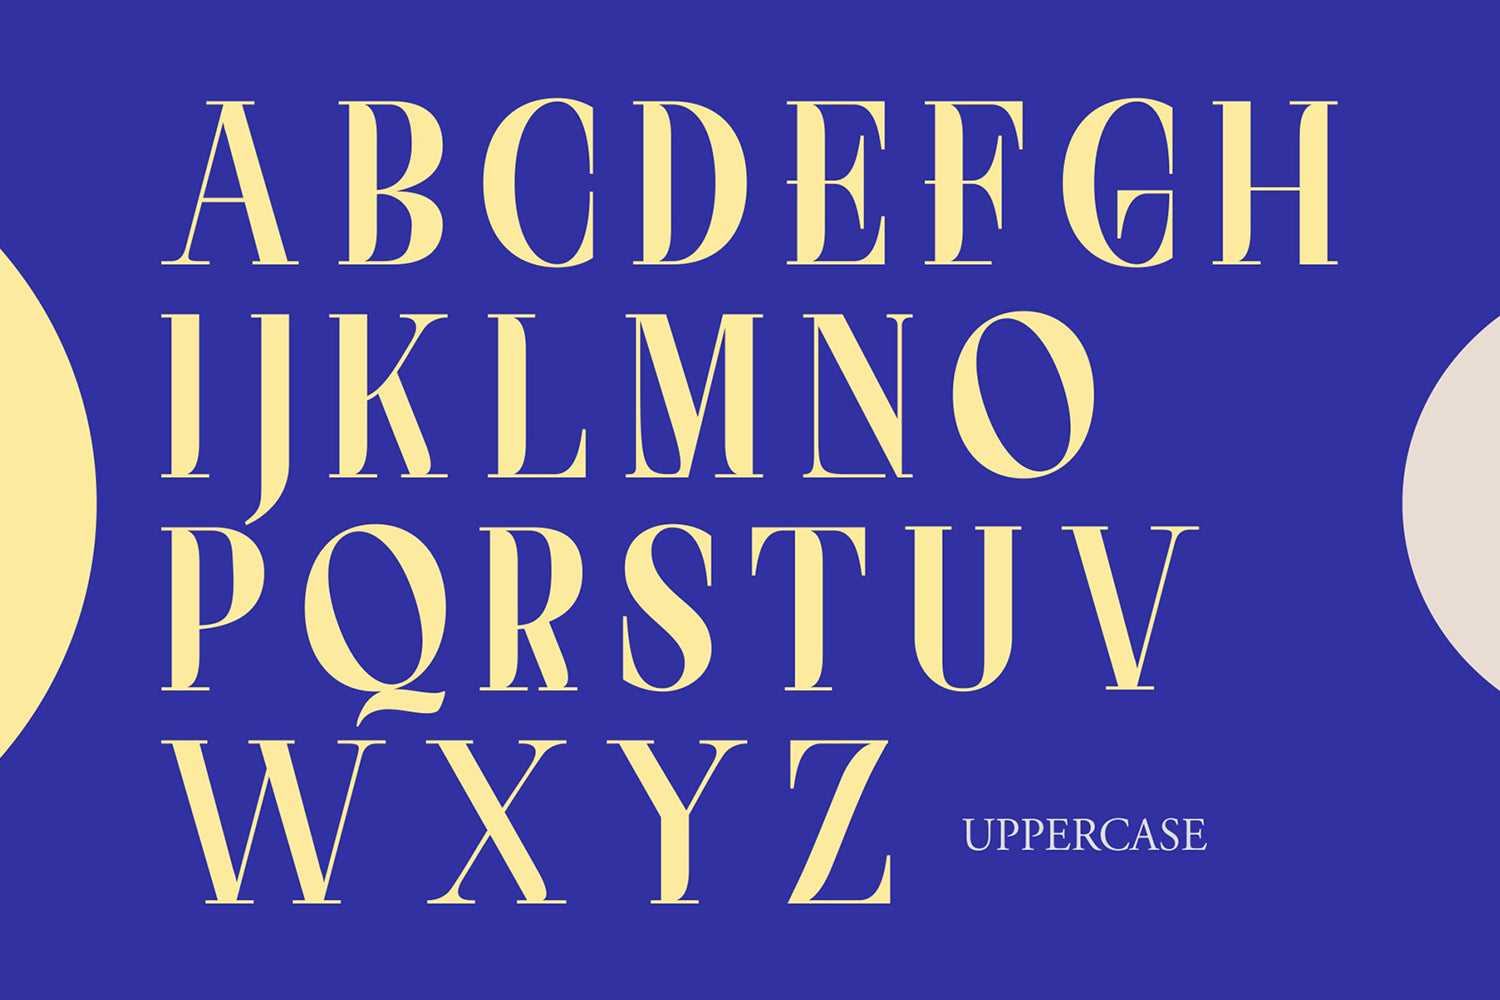 NCL Saigefy Cebahixa - Modern Serif Font